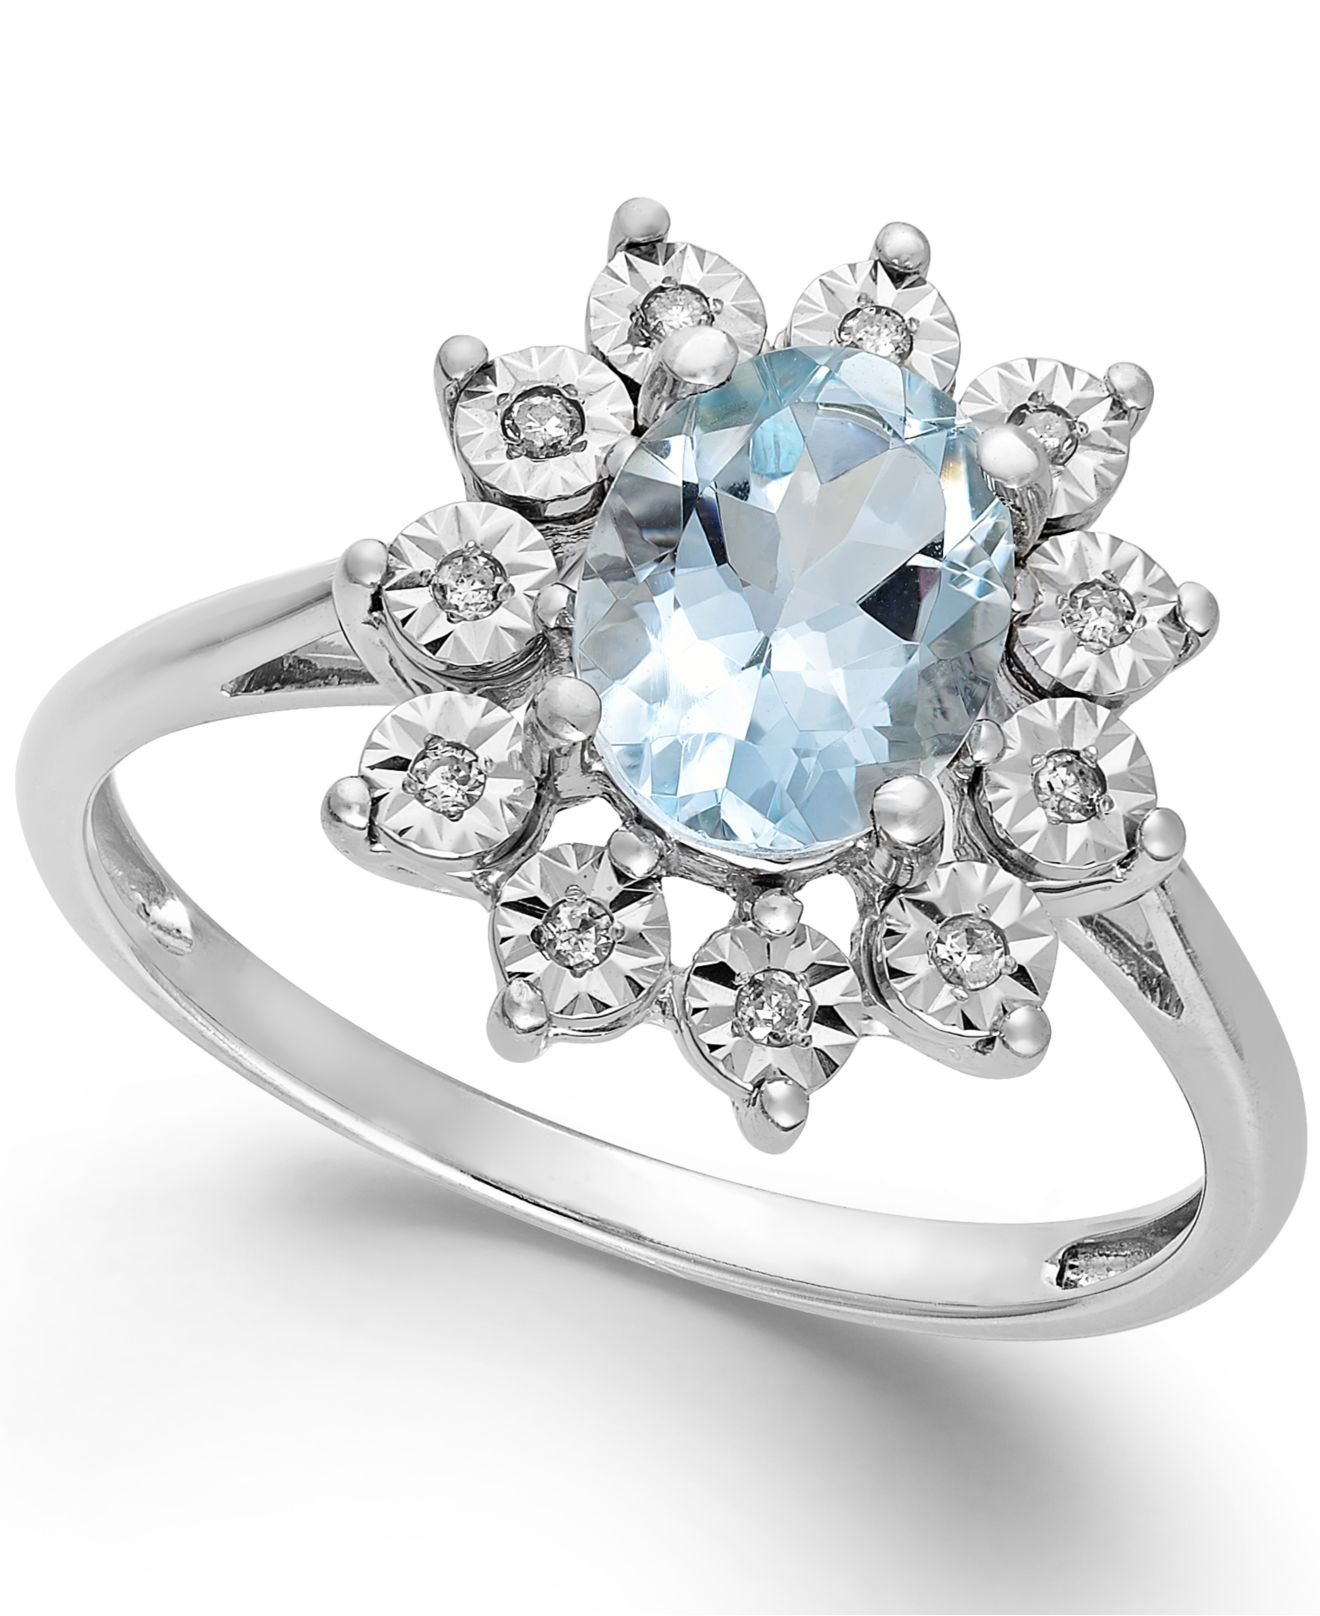 Macy Jewelry Promise Rings | Jewelry Ideas : Jewelry Ideas